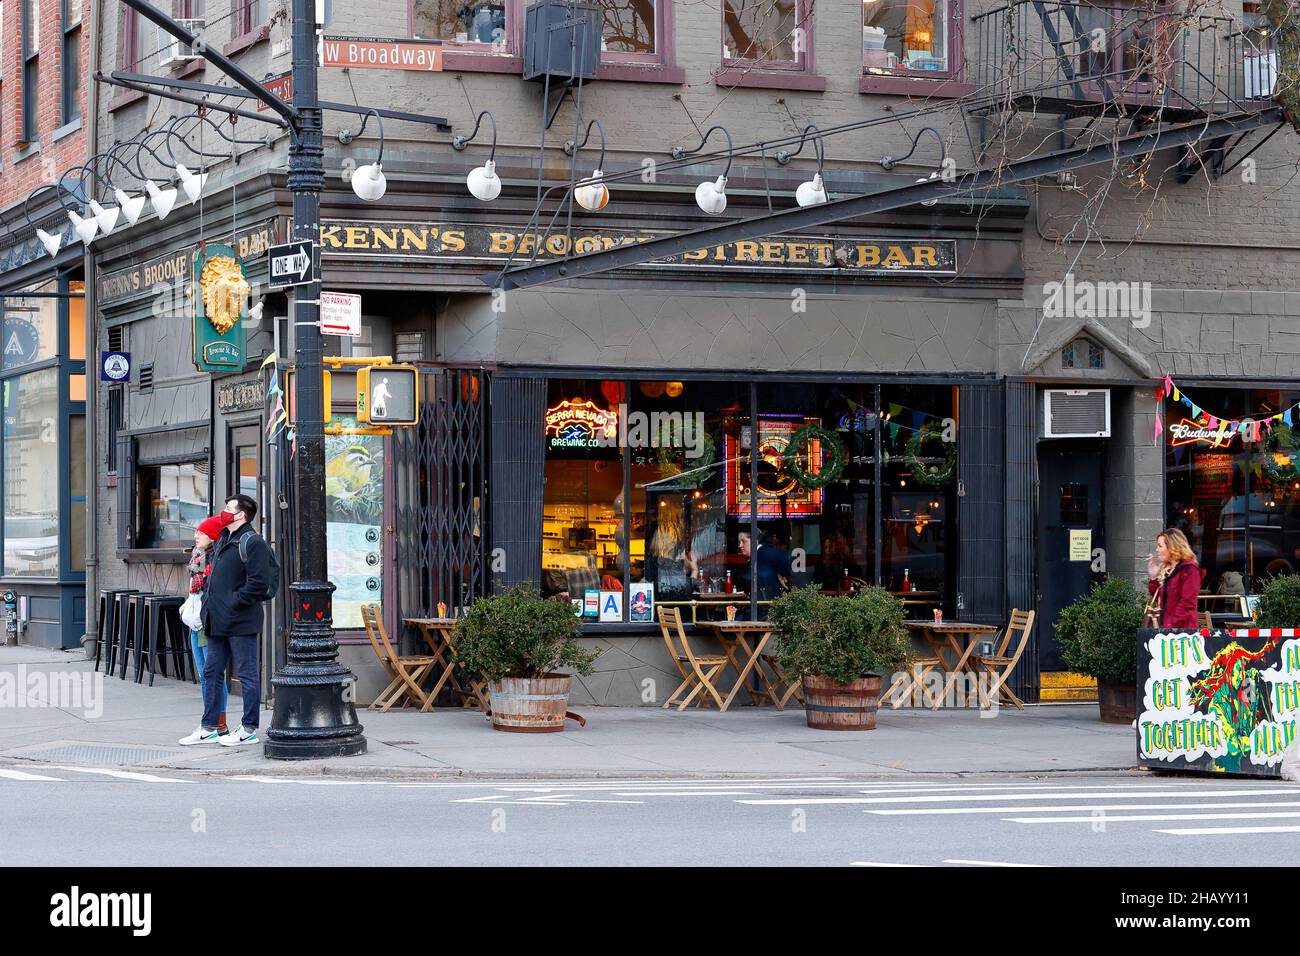 Kenn's Broome Street Bar, 363 W Broadway, New York, NYC storefront photo of a bar and restaurant in the SoHo neighborhood of Manhattan. Stock Photo